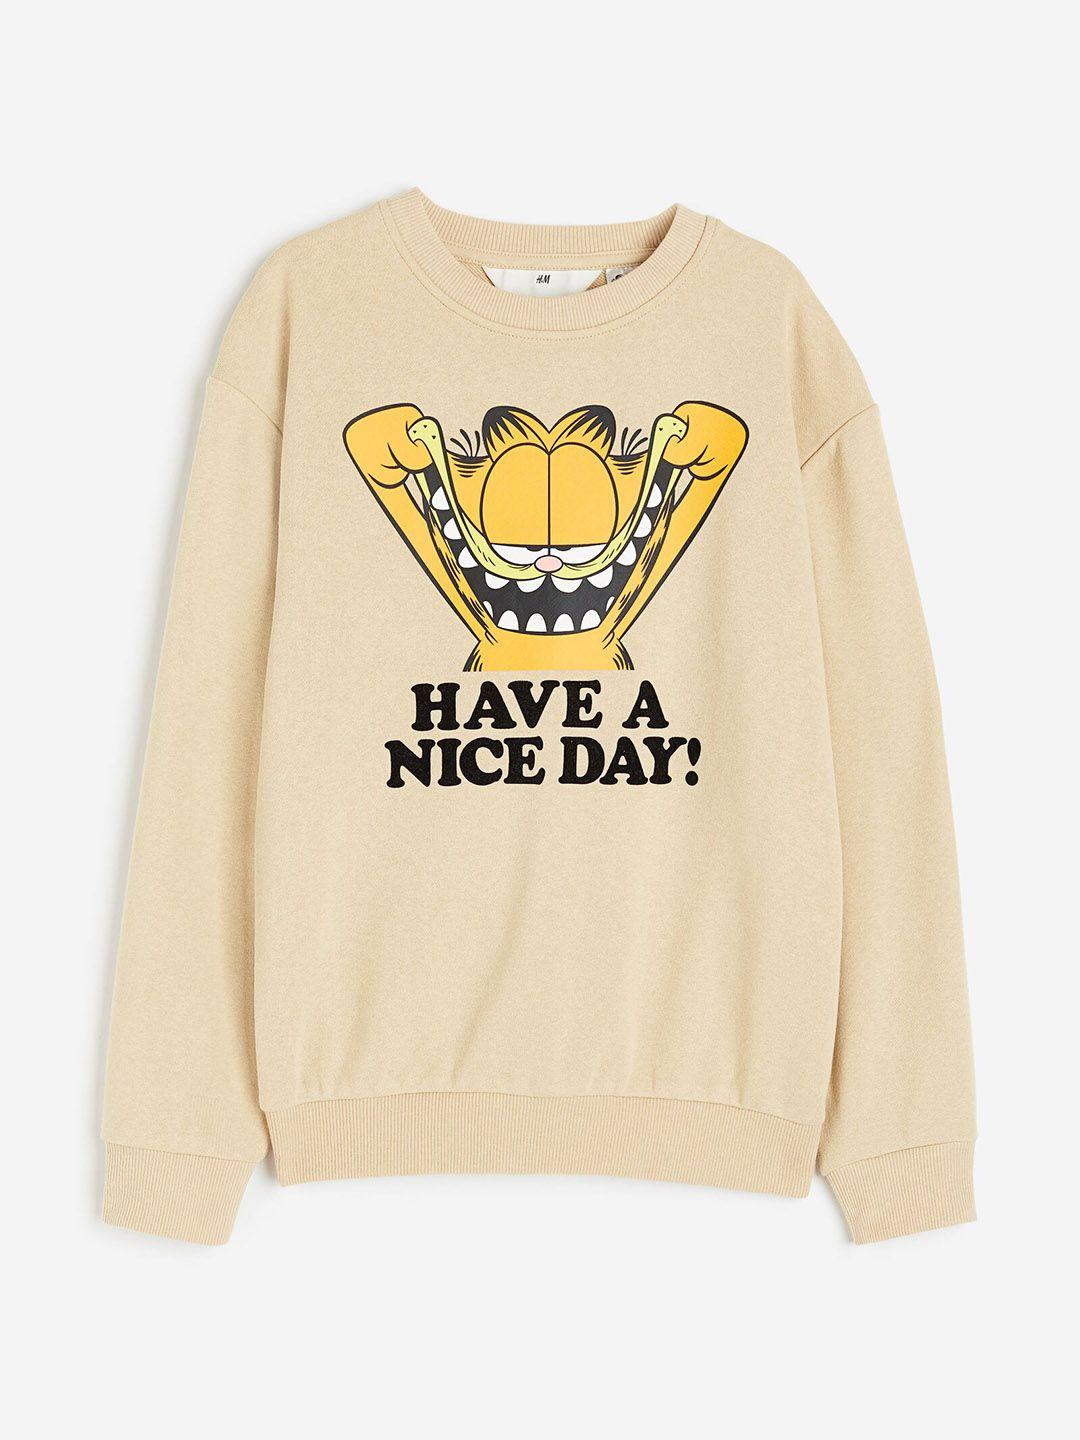 h&m boys printed sweatshirt